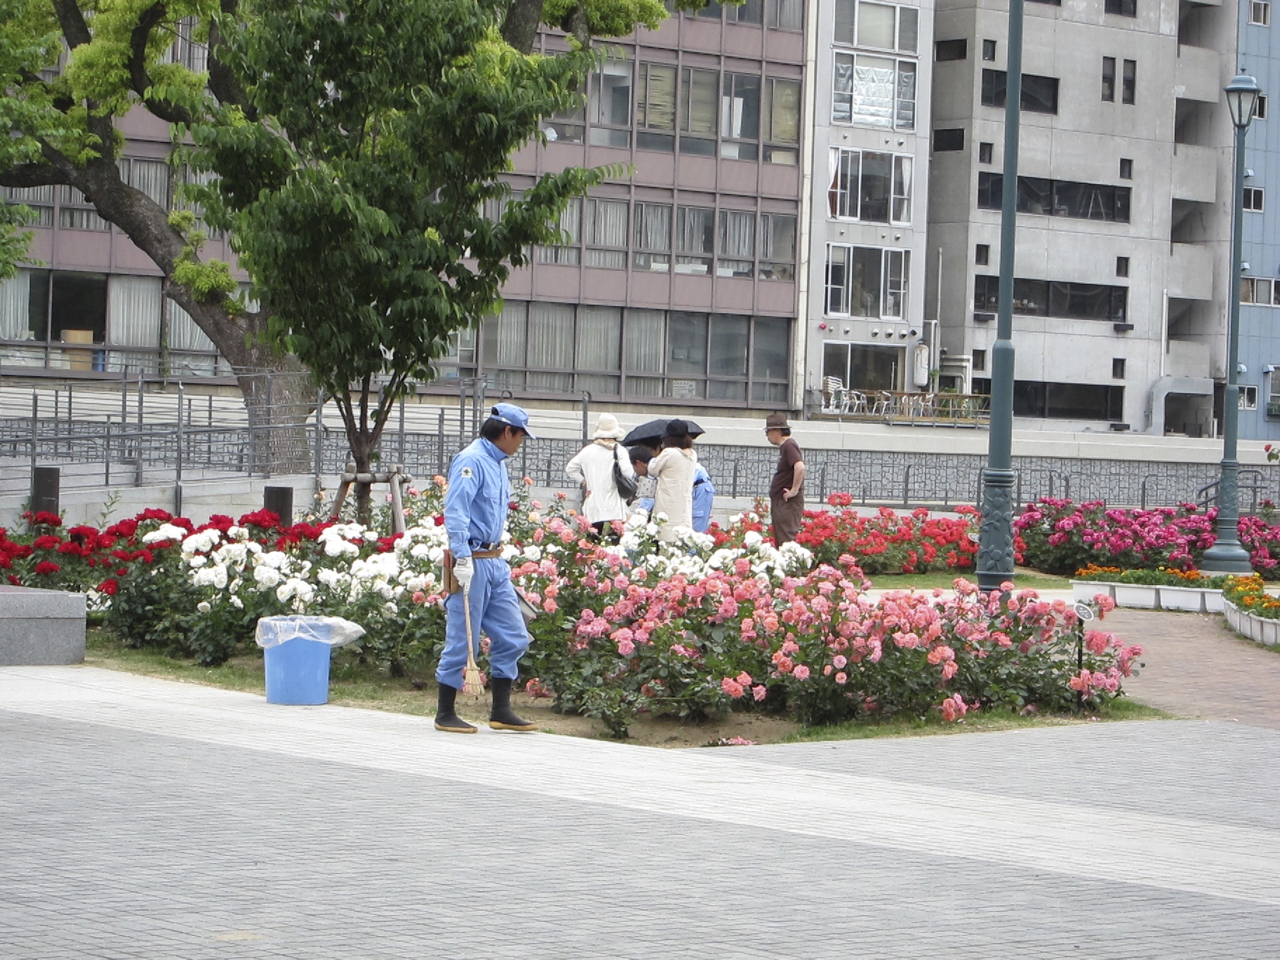 Nakanoshima Rose Garden